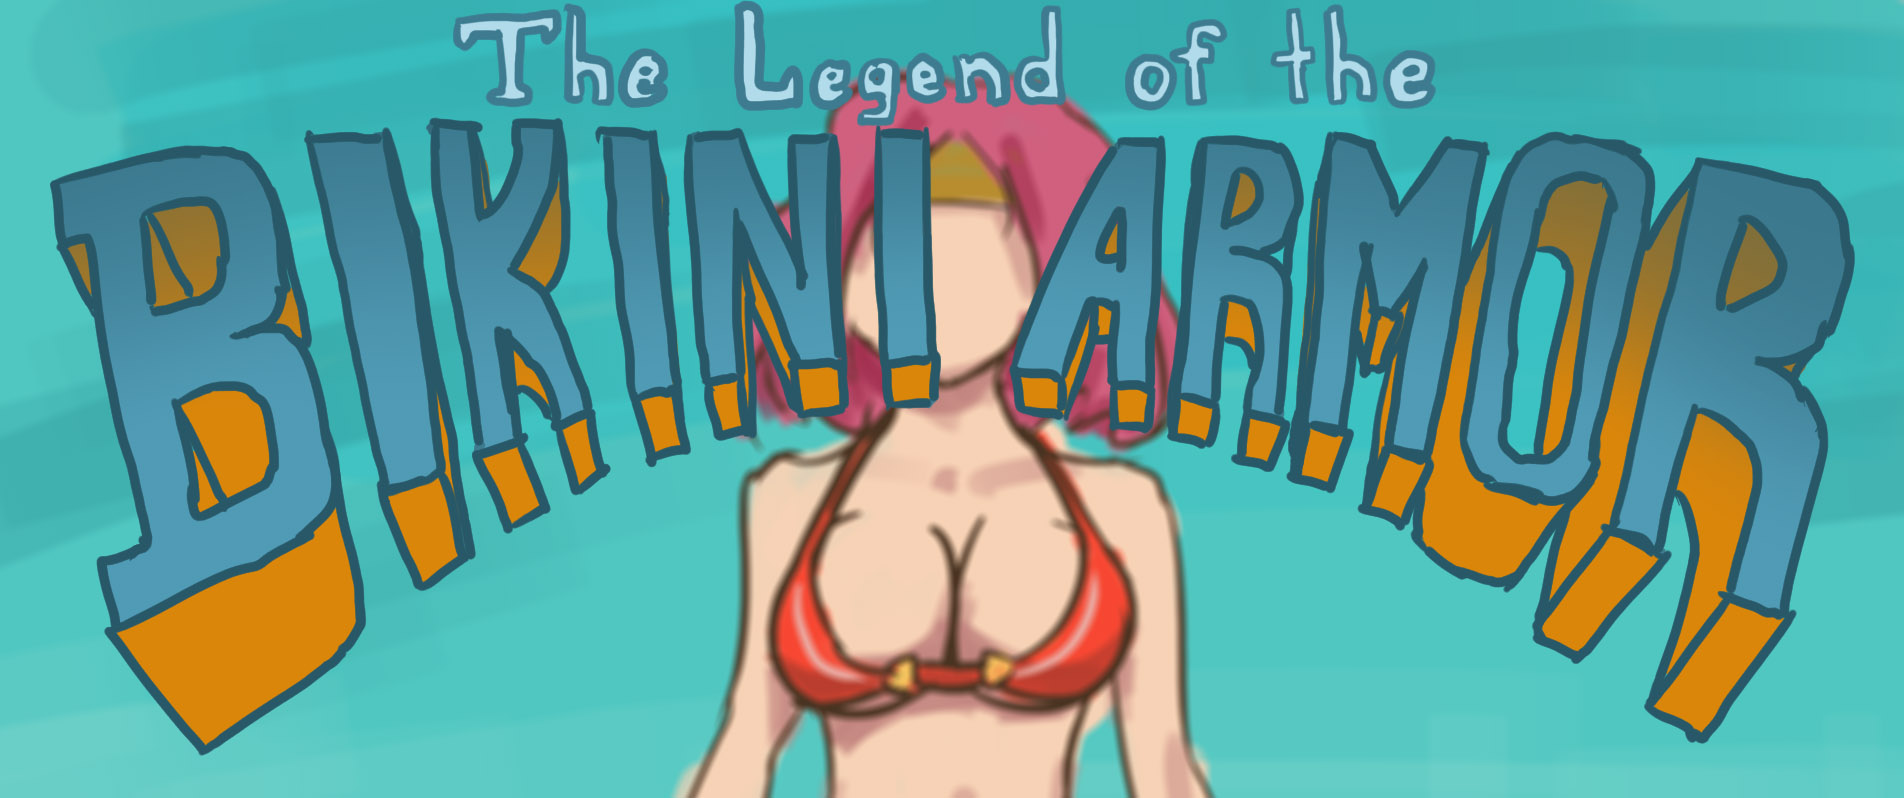 The Legend of the Bikini Armor